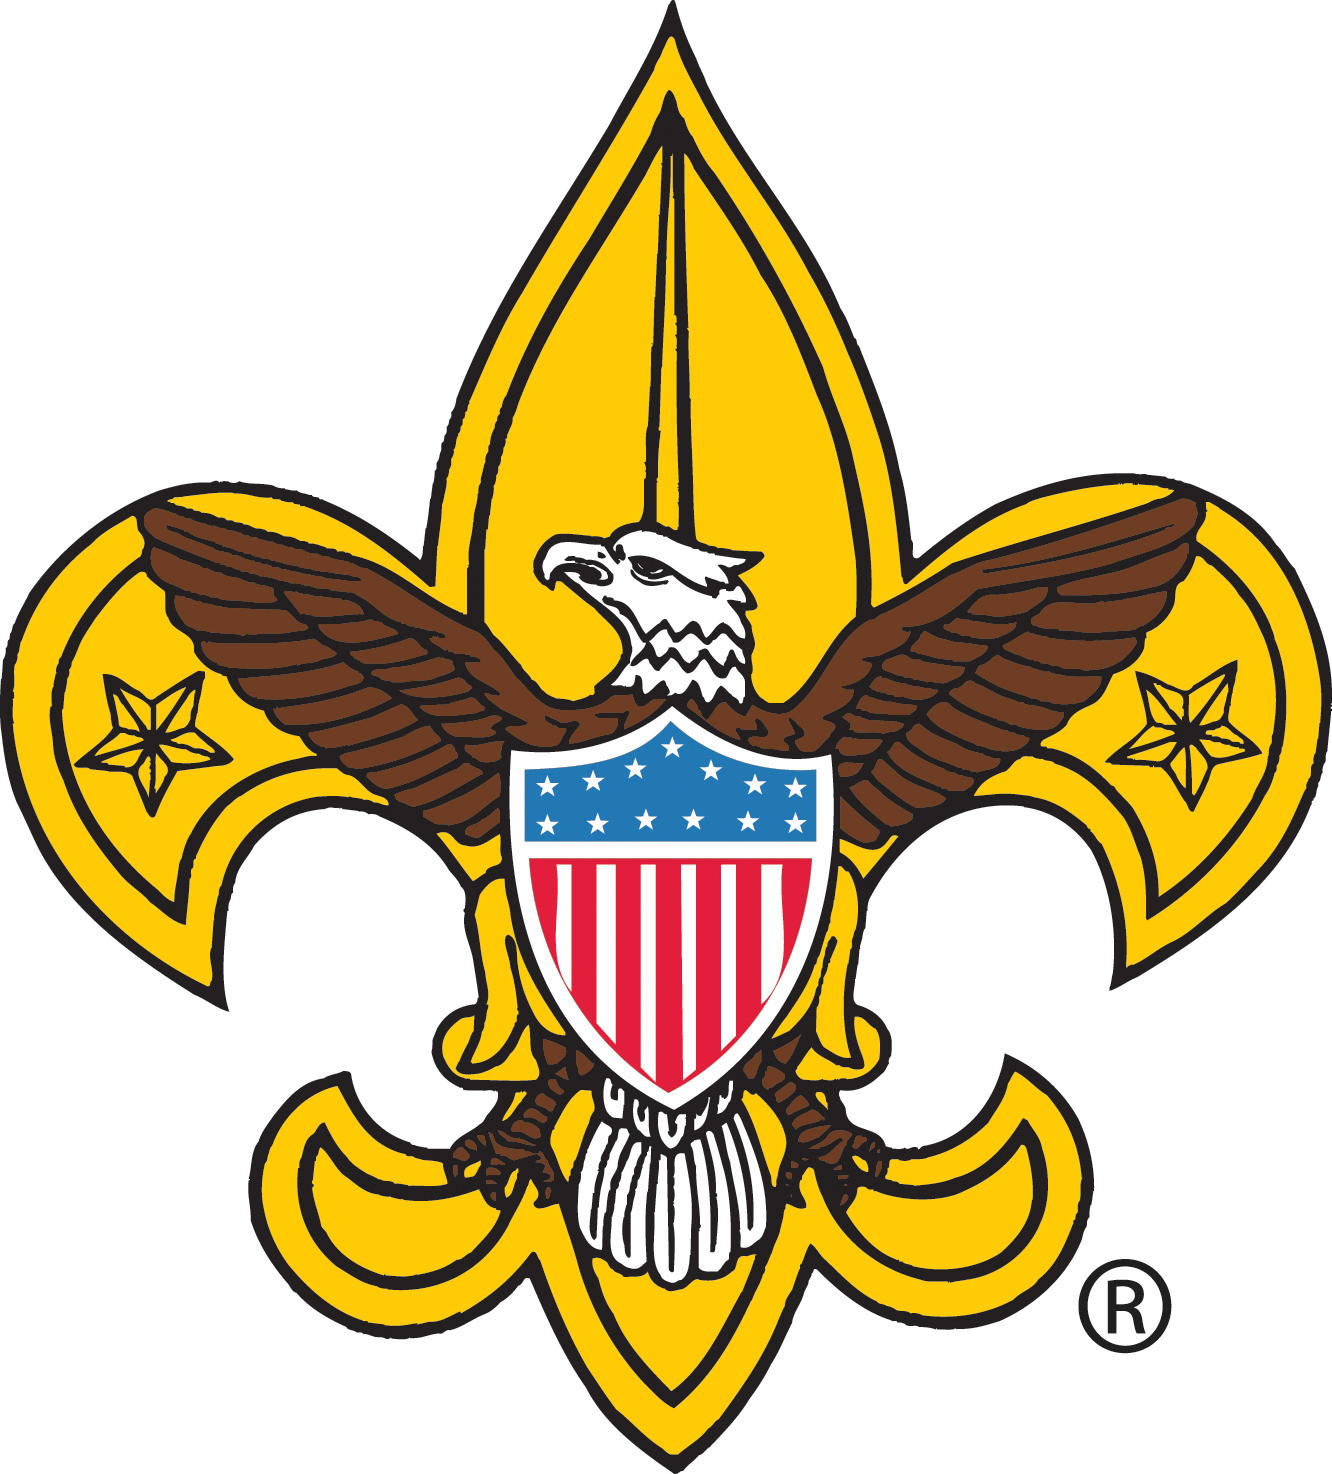 Boy Scout Council Software, Boy Scout Camp Software